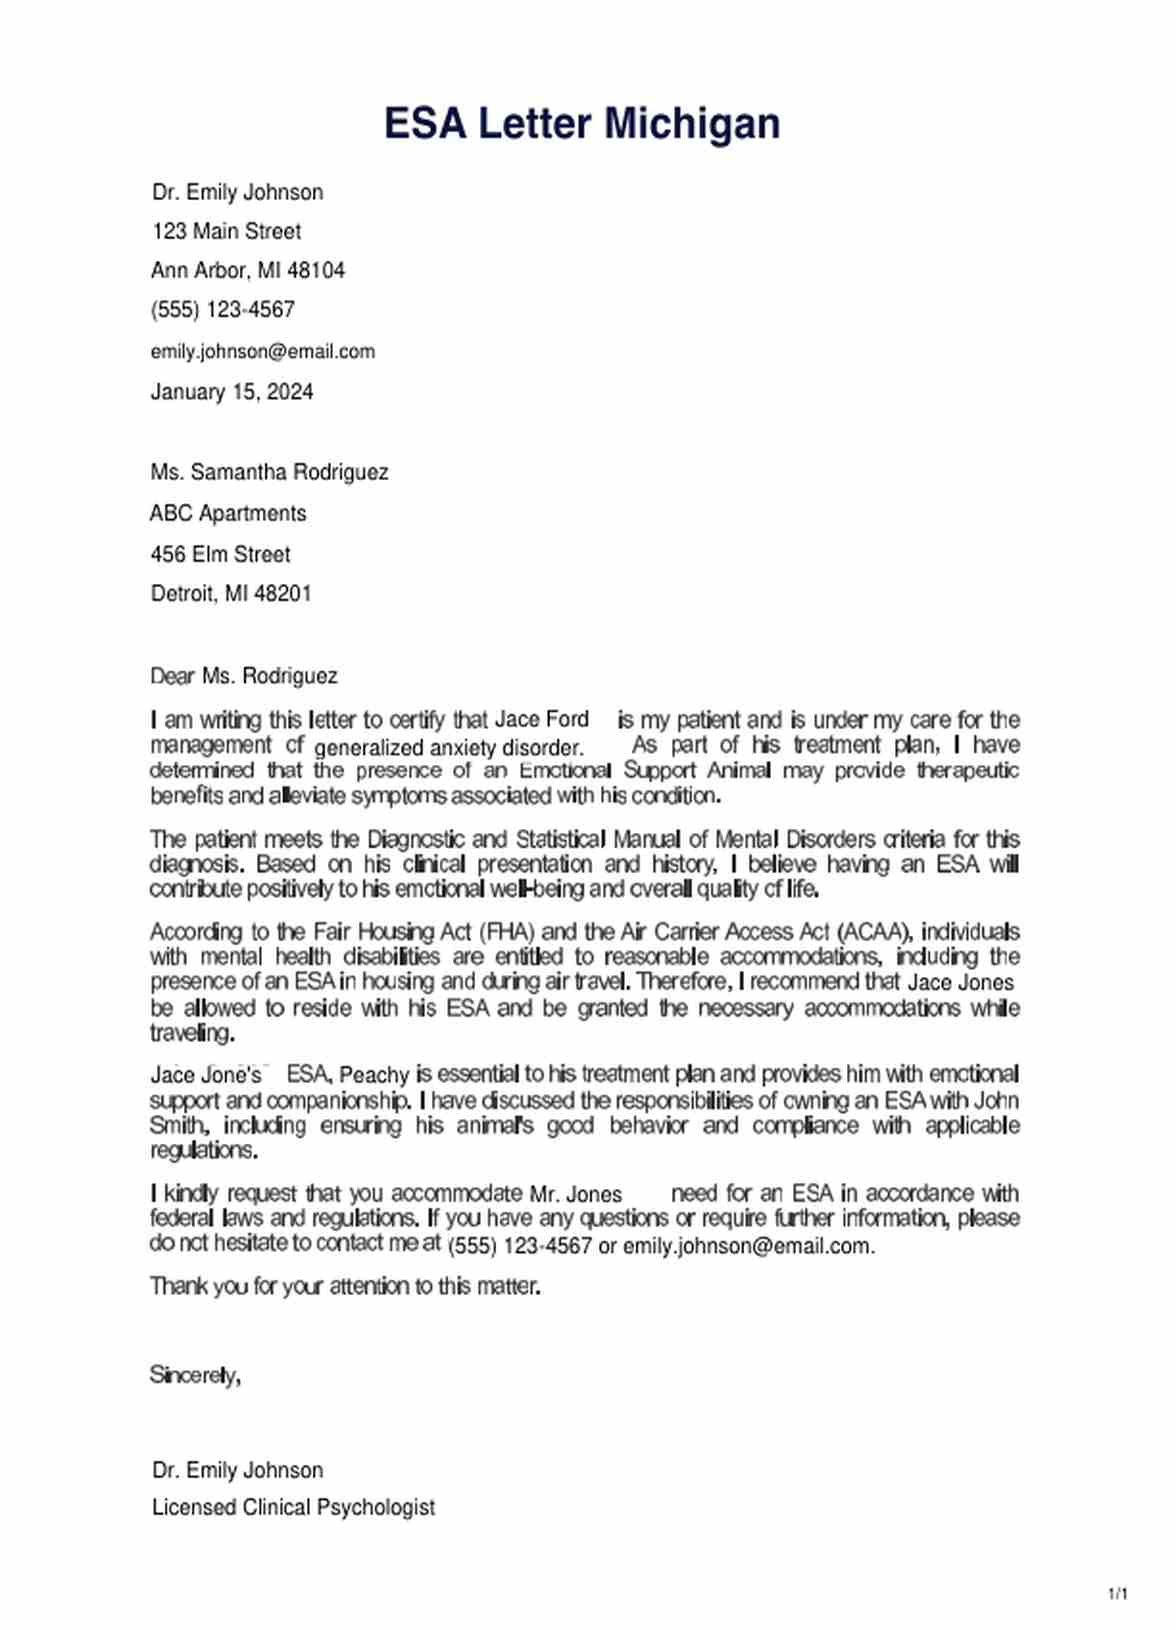 ESA Letter Michigan PDF Example